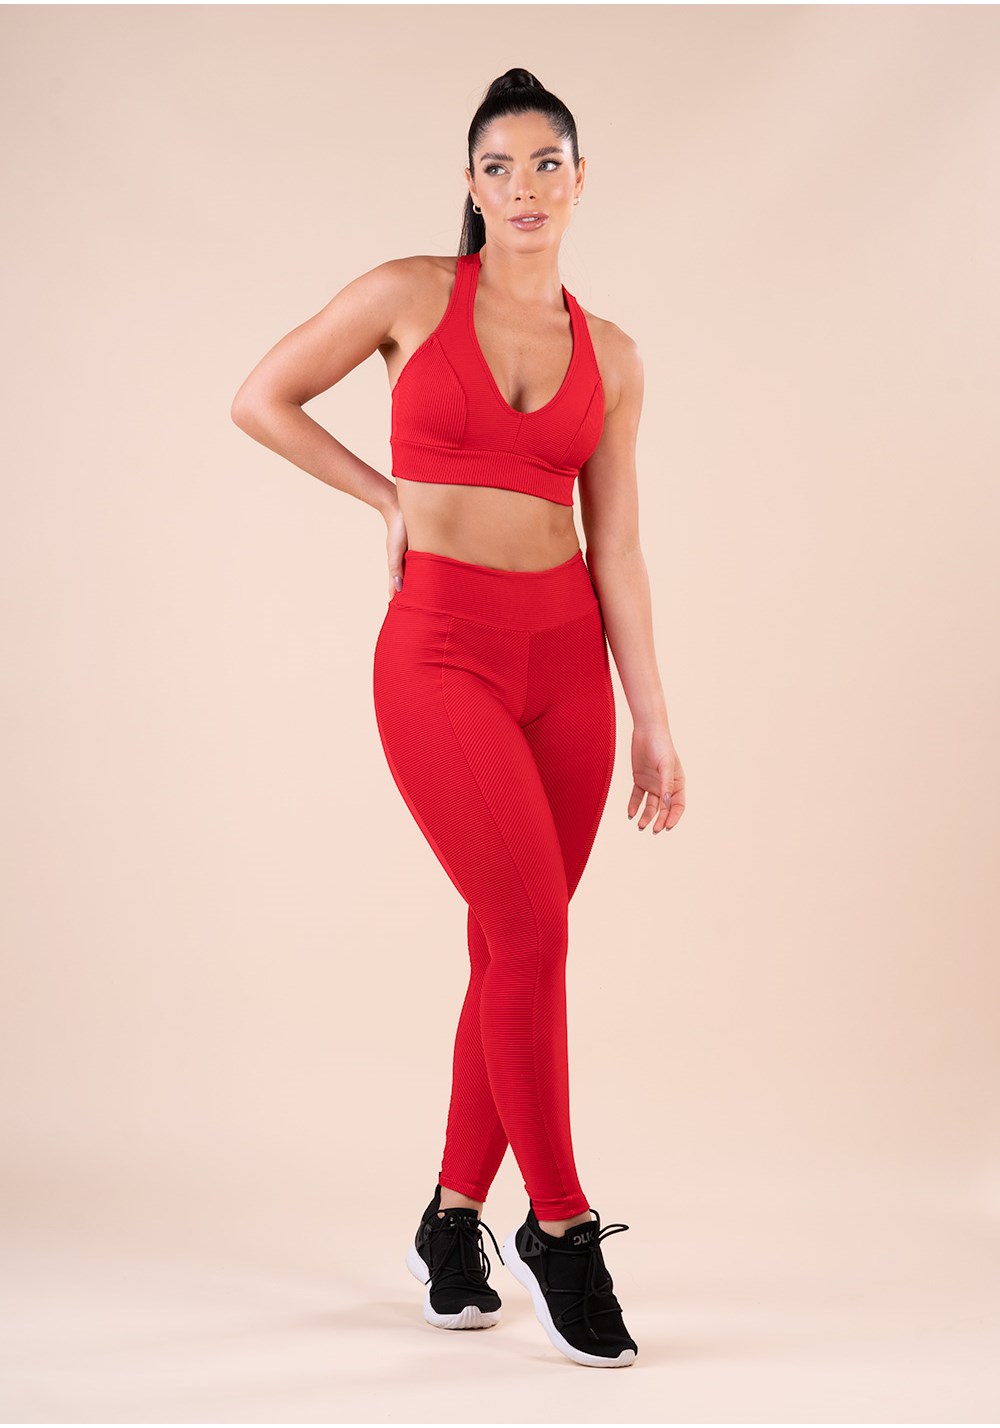 https://dlkmodas.fbitsstatic.net/img/p/legging-fitness-feminina-vermelha-canelada-com-recorte-action-82005/303031-1.jpg?w=1000&h=1428&v=no-value